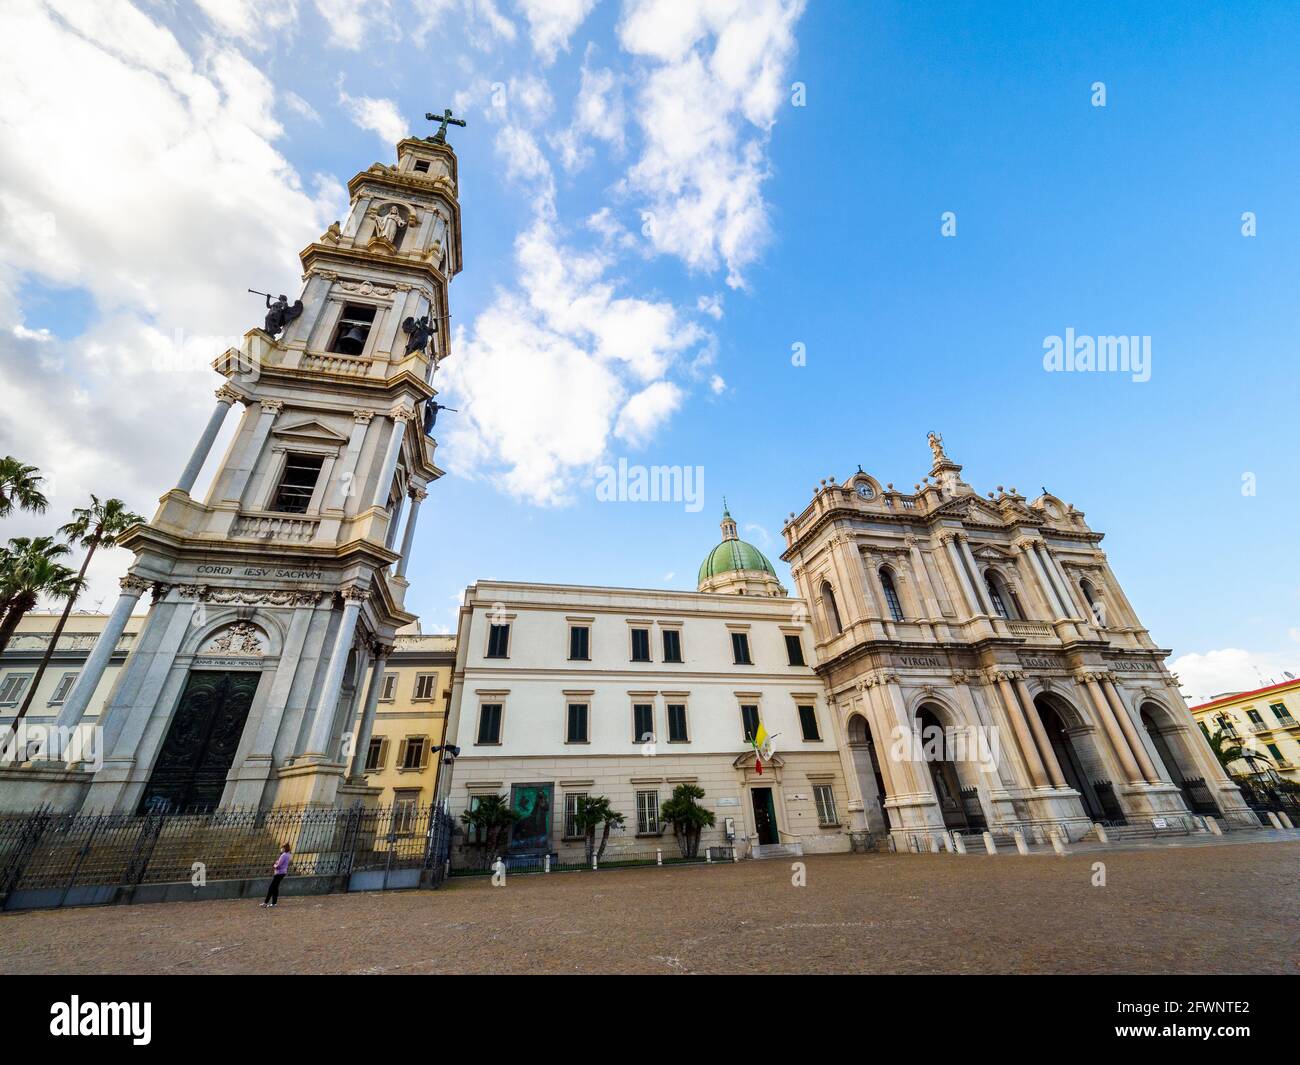 Pontificio Santuario della Beata Vergine del Santo Rosario di Pompei - Campania region, Italy Stock Photo